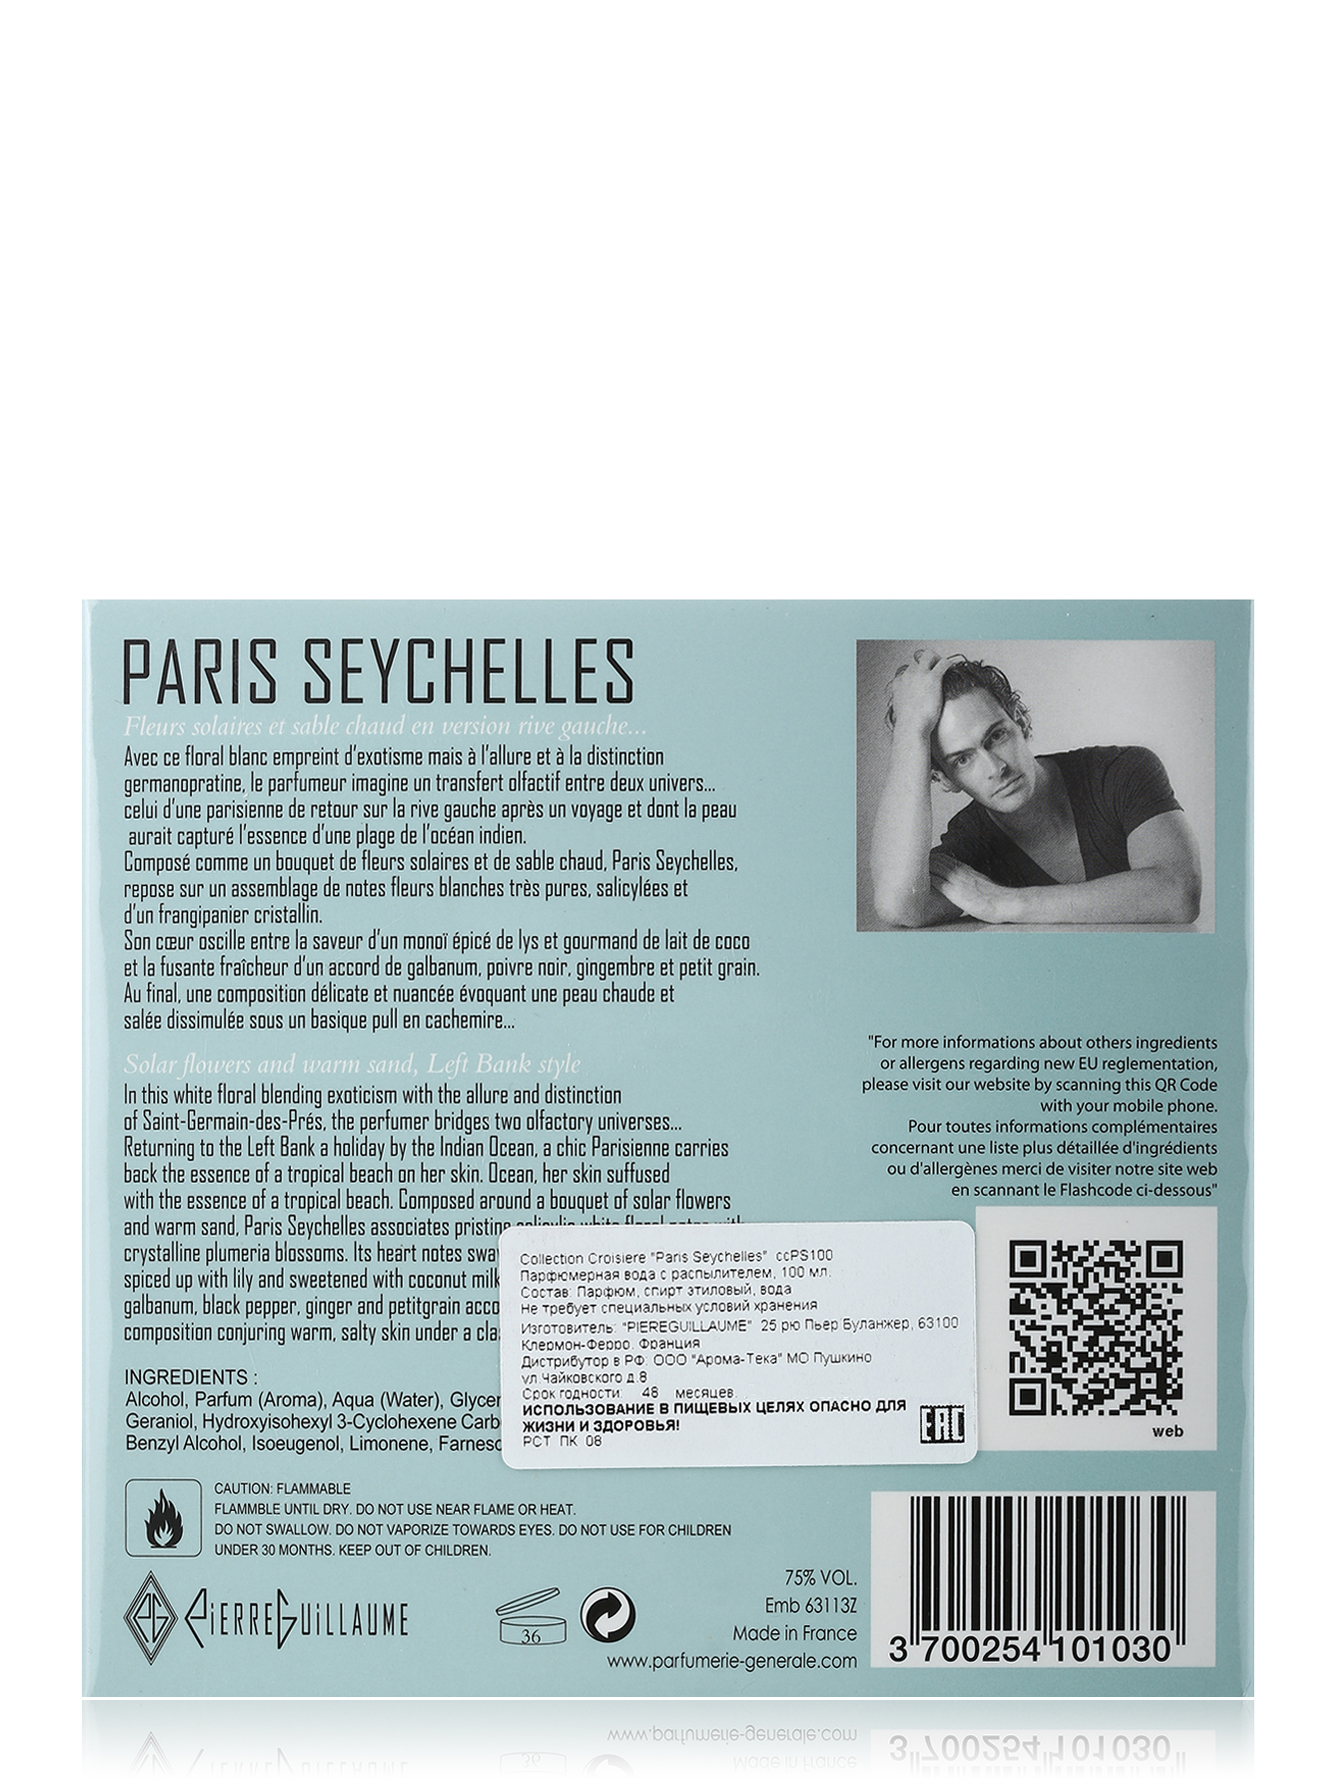  Туалетная вода - Paris seychelles Collection Croisiere, 100ml - Модель Верх-Низ